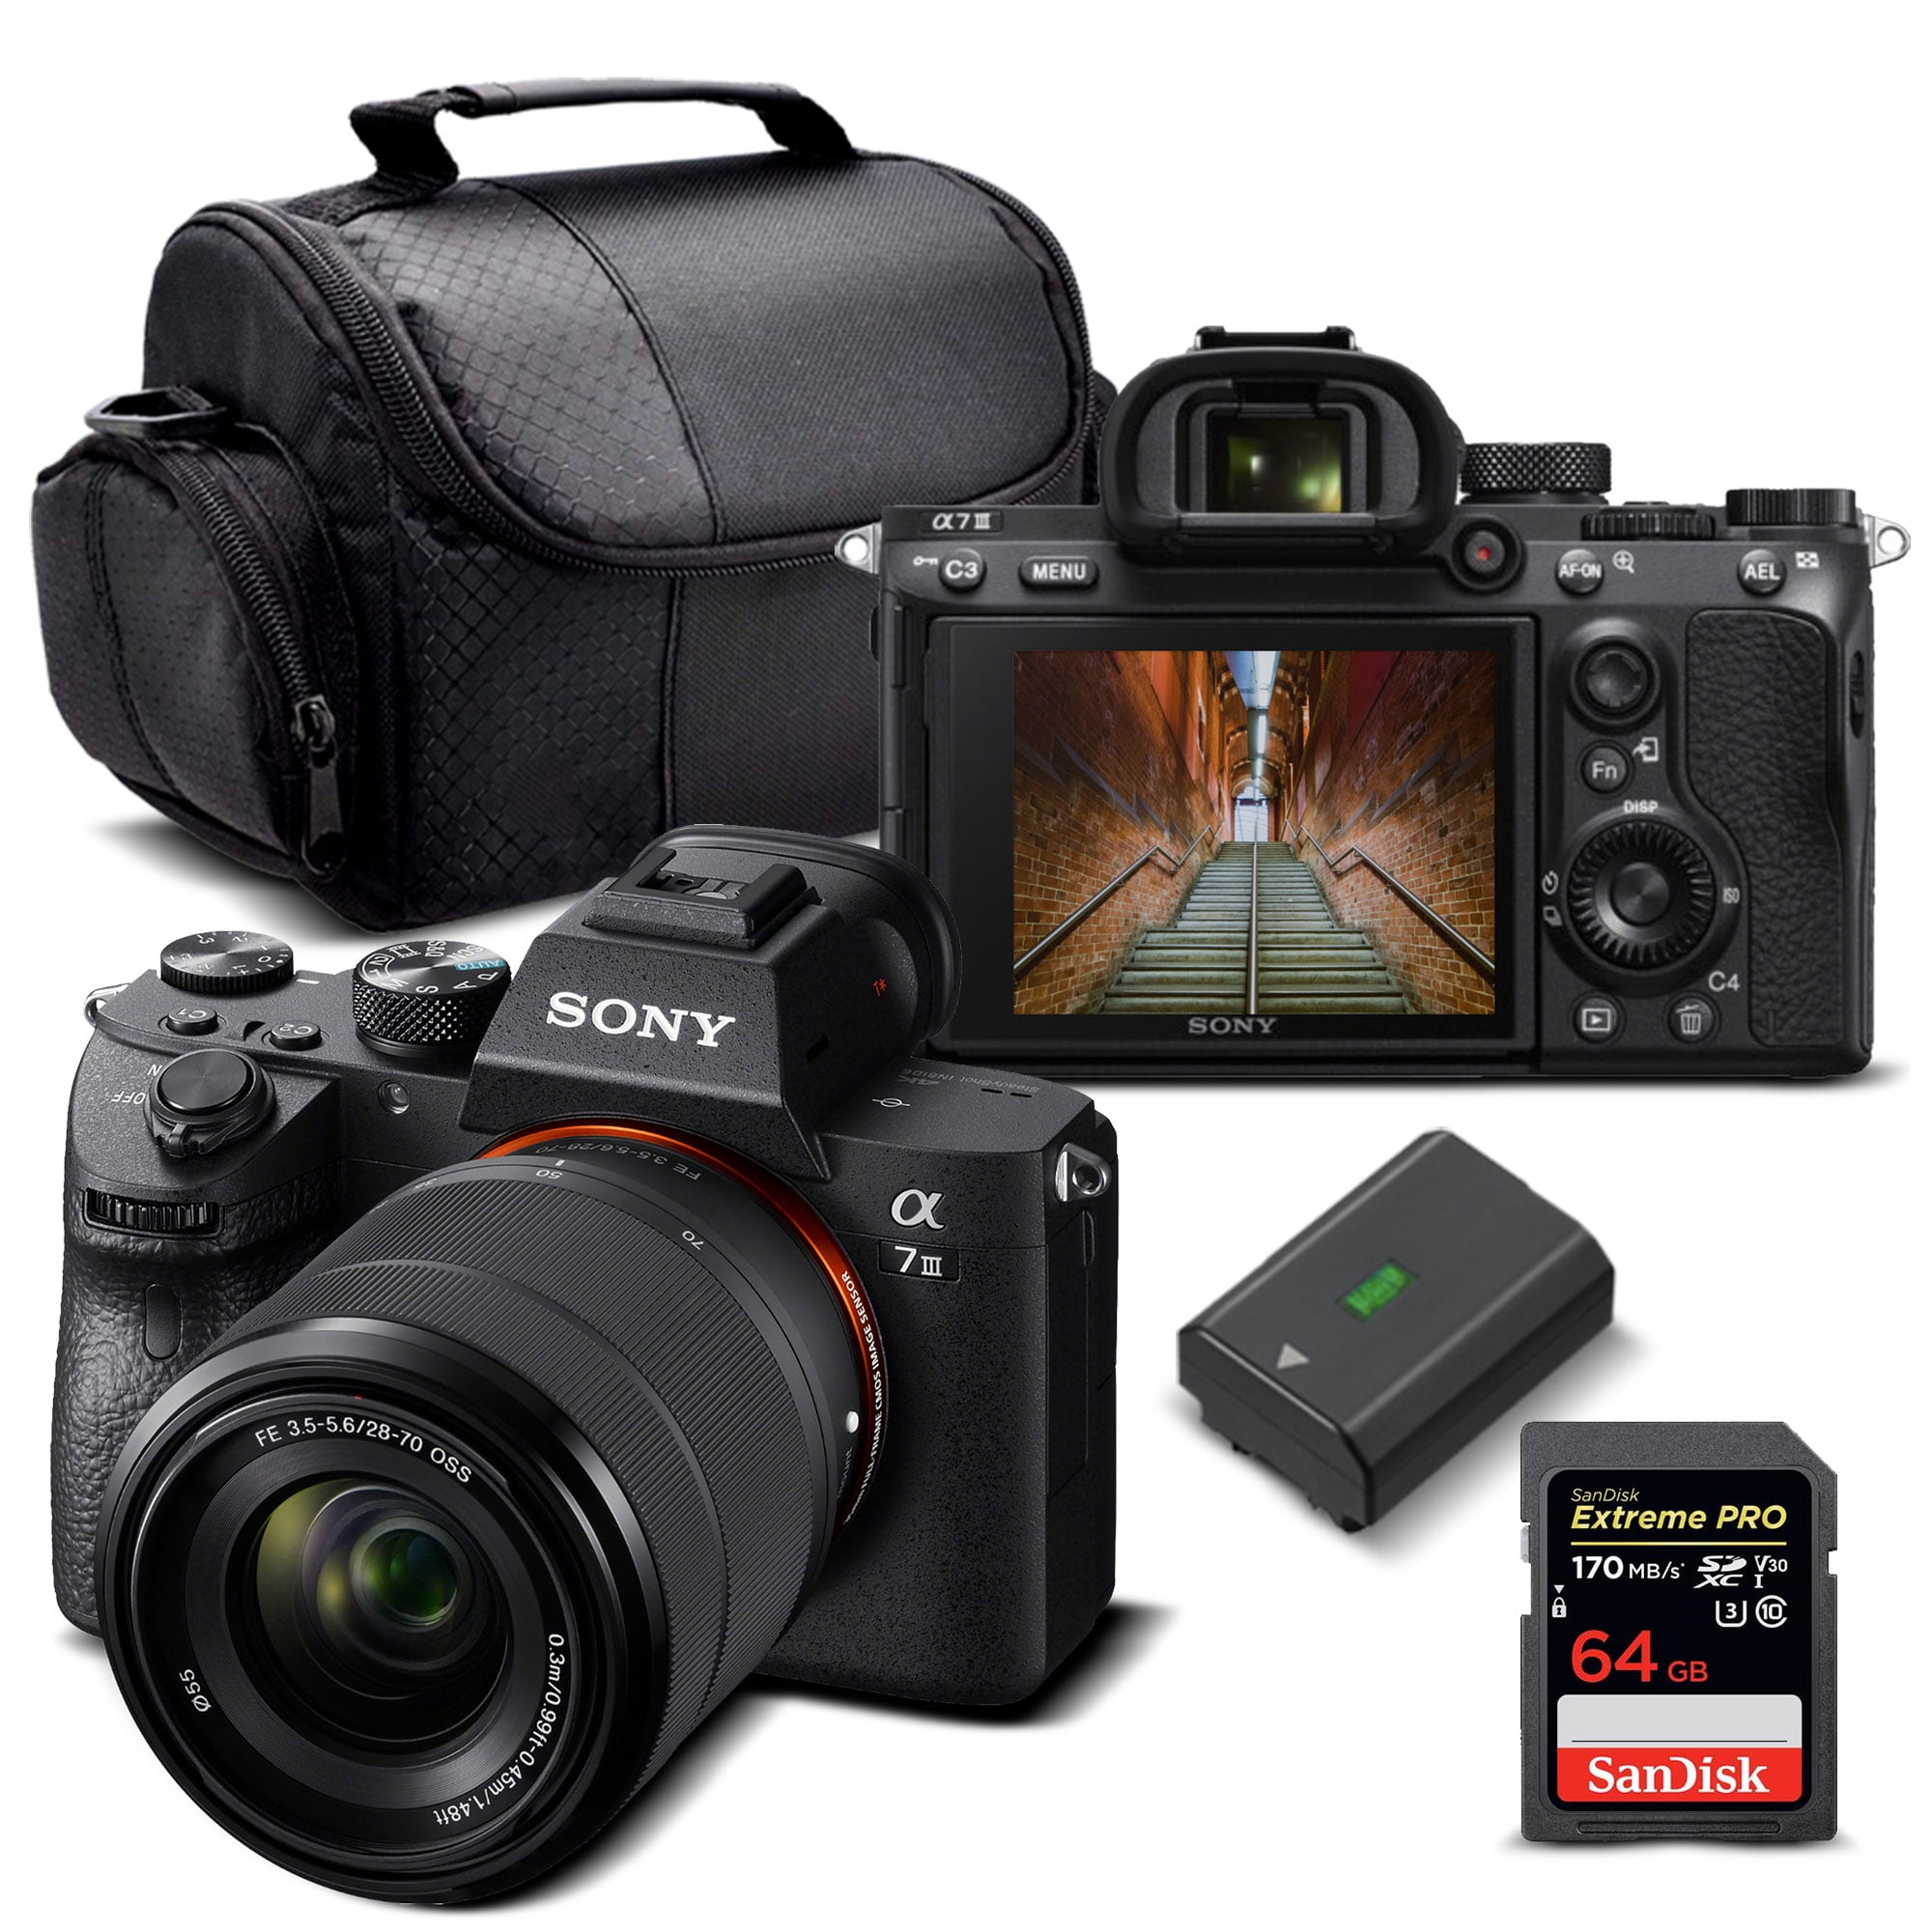 Sony Alpha a7 III Mirrorless Digital Camera with 28-70mm Lens 